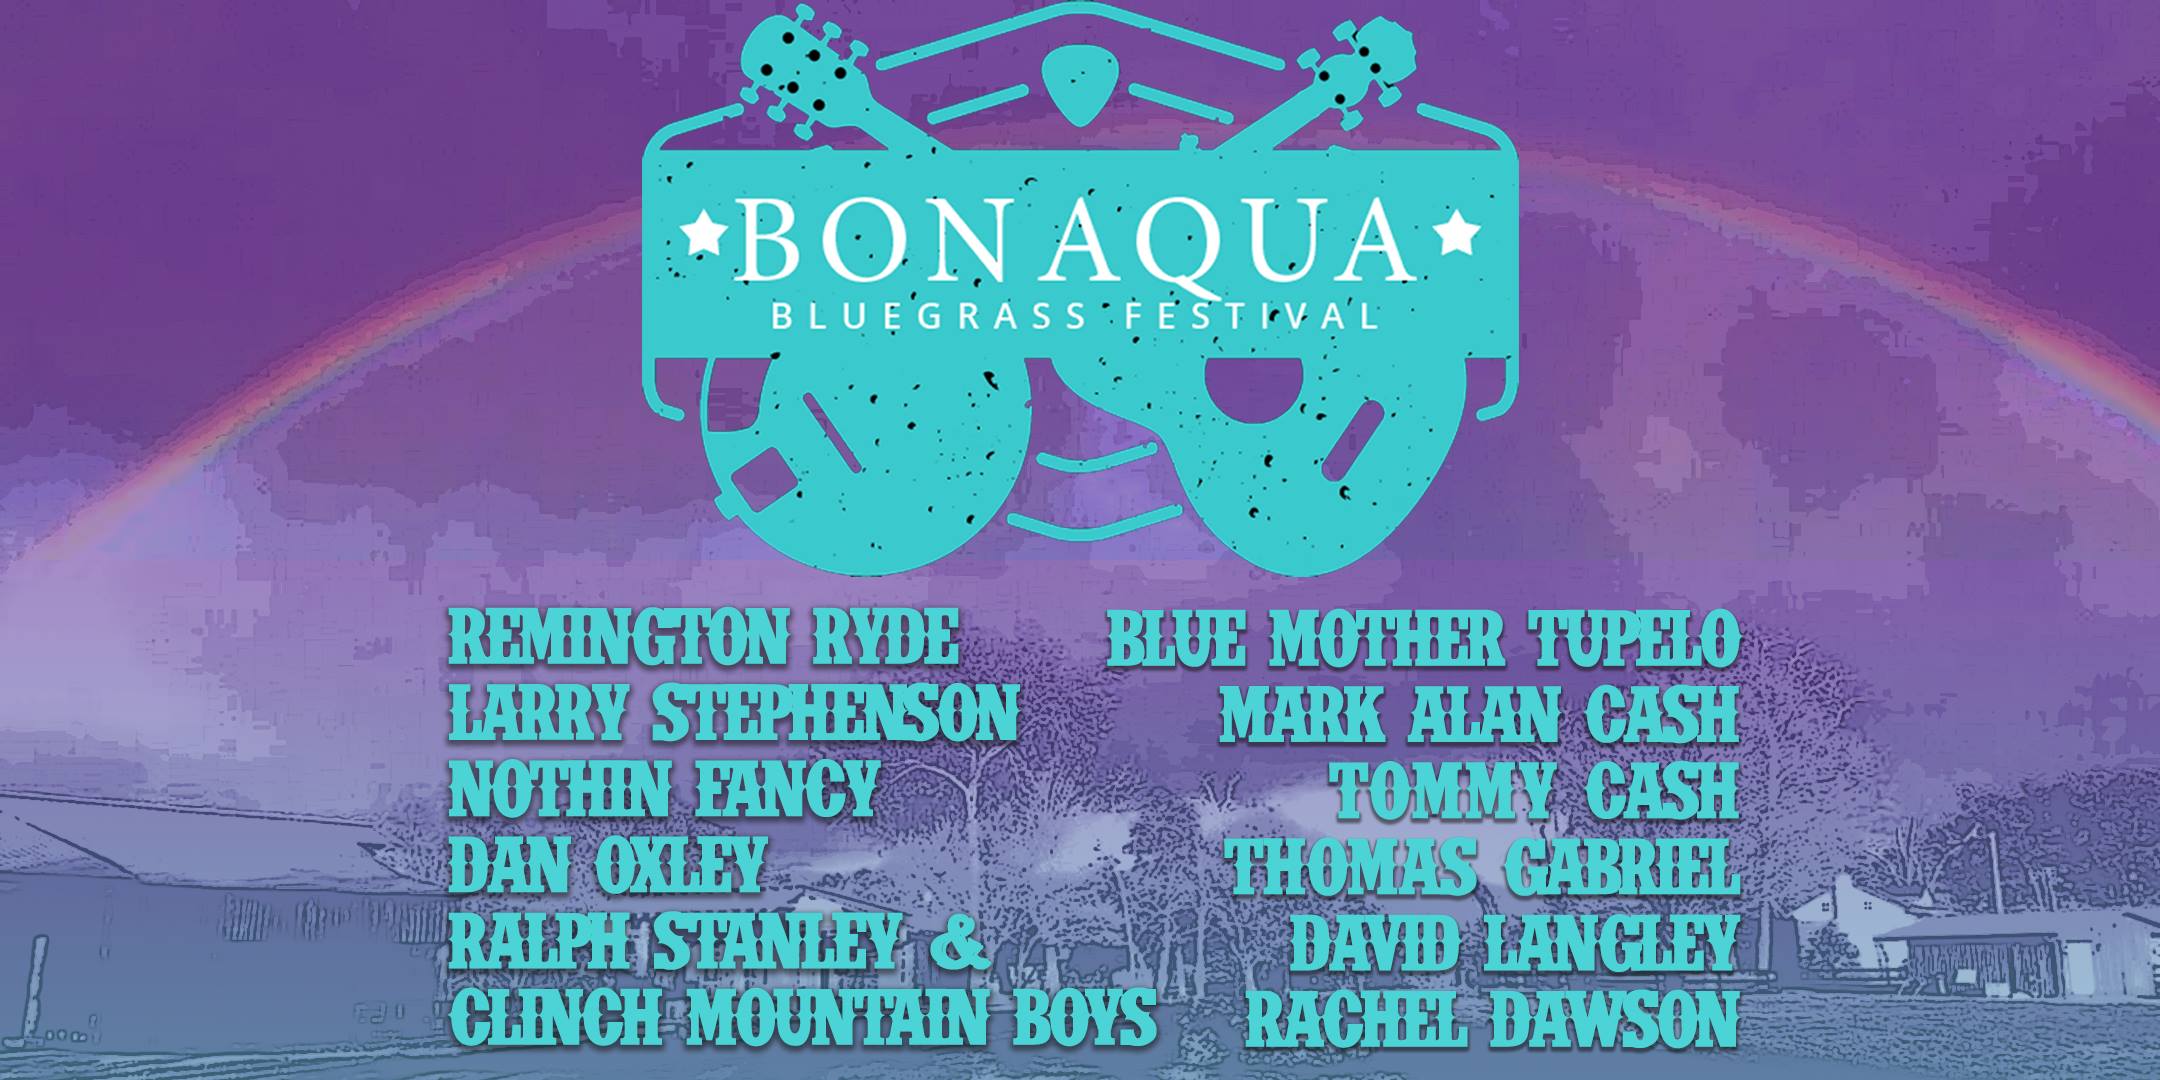 Bon Aqua Bluegrass Festival